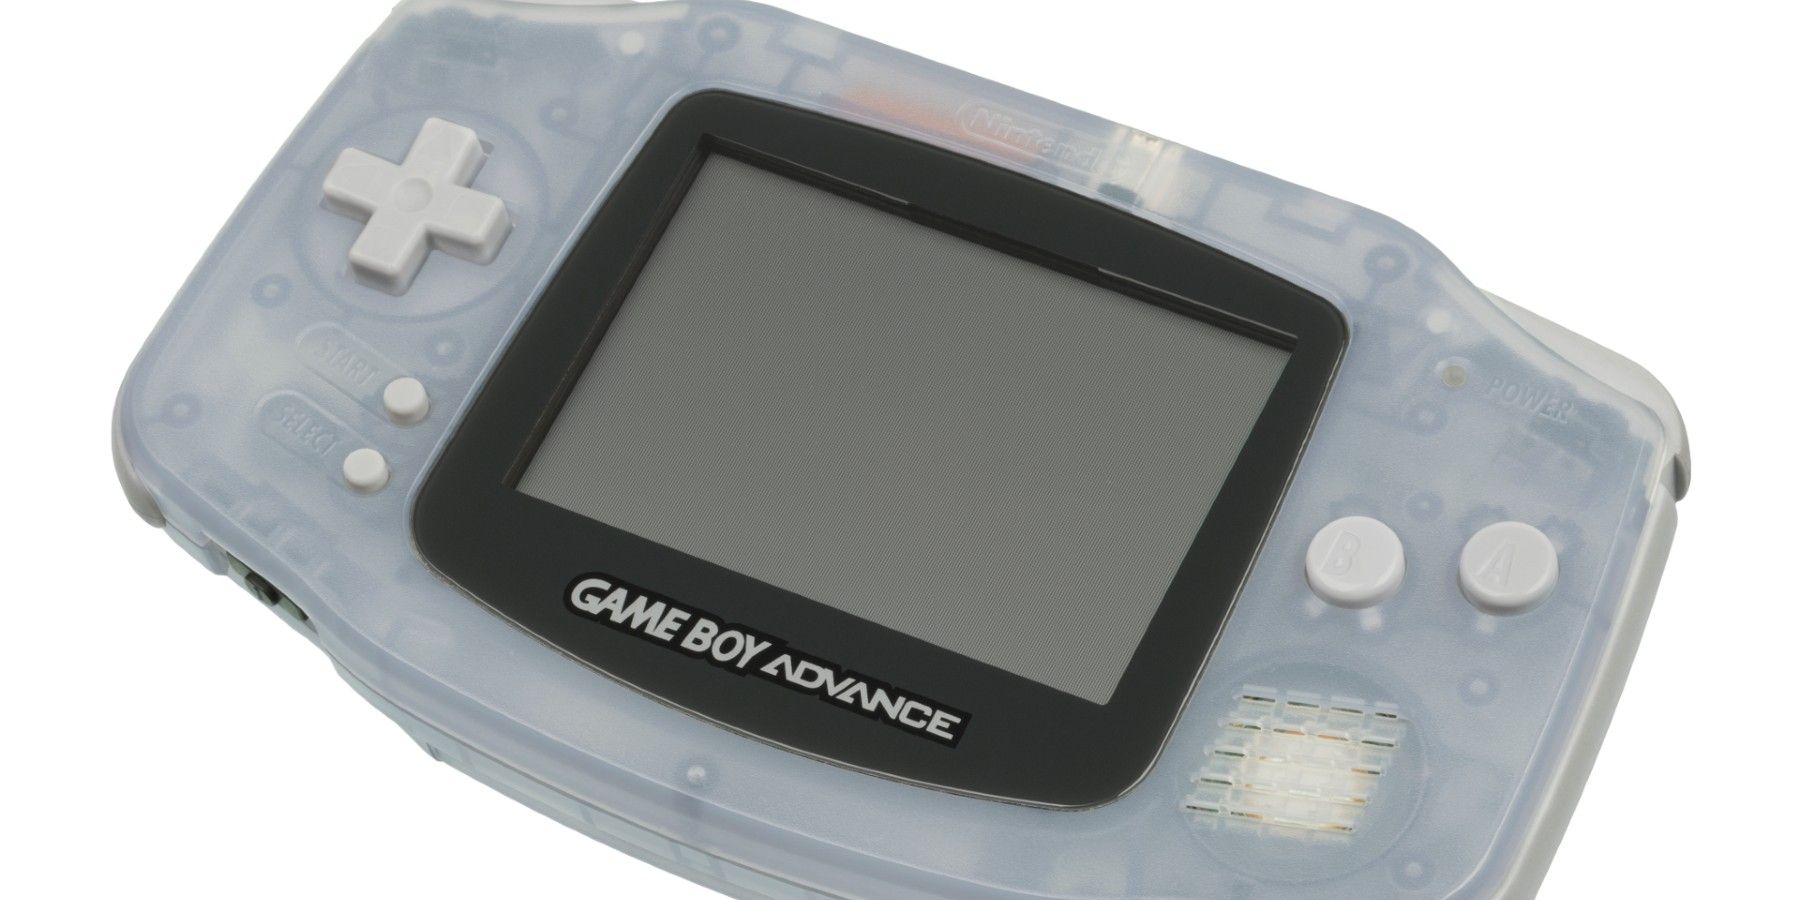 Nintendo's Never-Before-Seen Game Boy Advance Successor 'Iris' Leaks